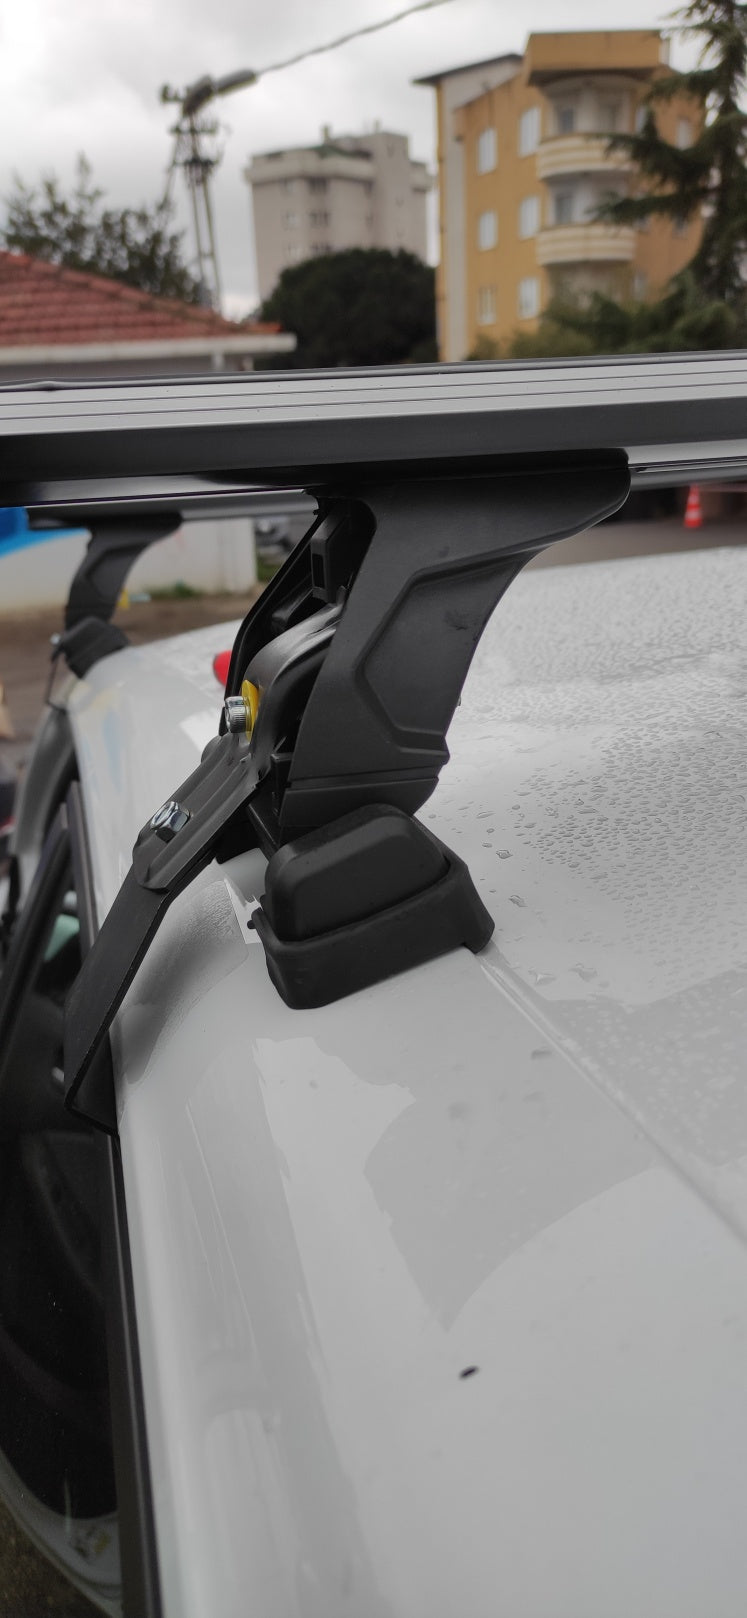 Renault Clio 4 Hatcback Ara Atkısı Tavan Taşıyıcı Sistemleri Paw Pro 4 Siyah